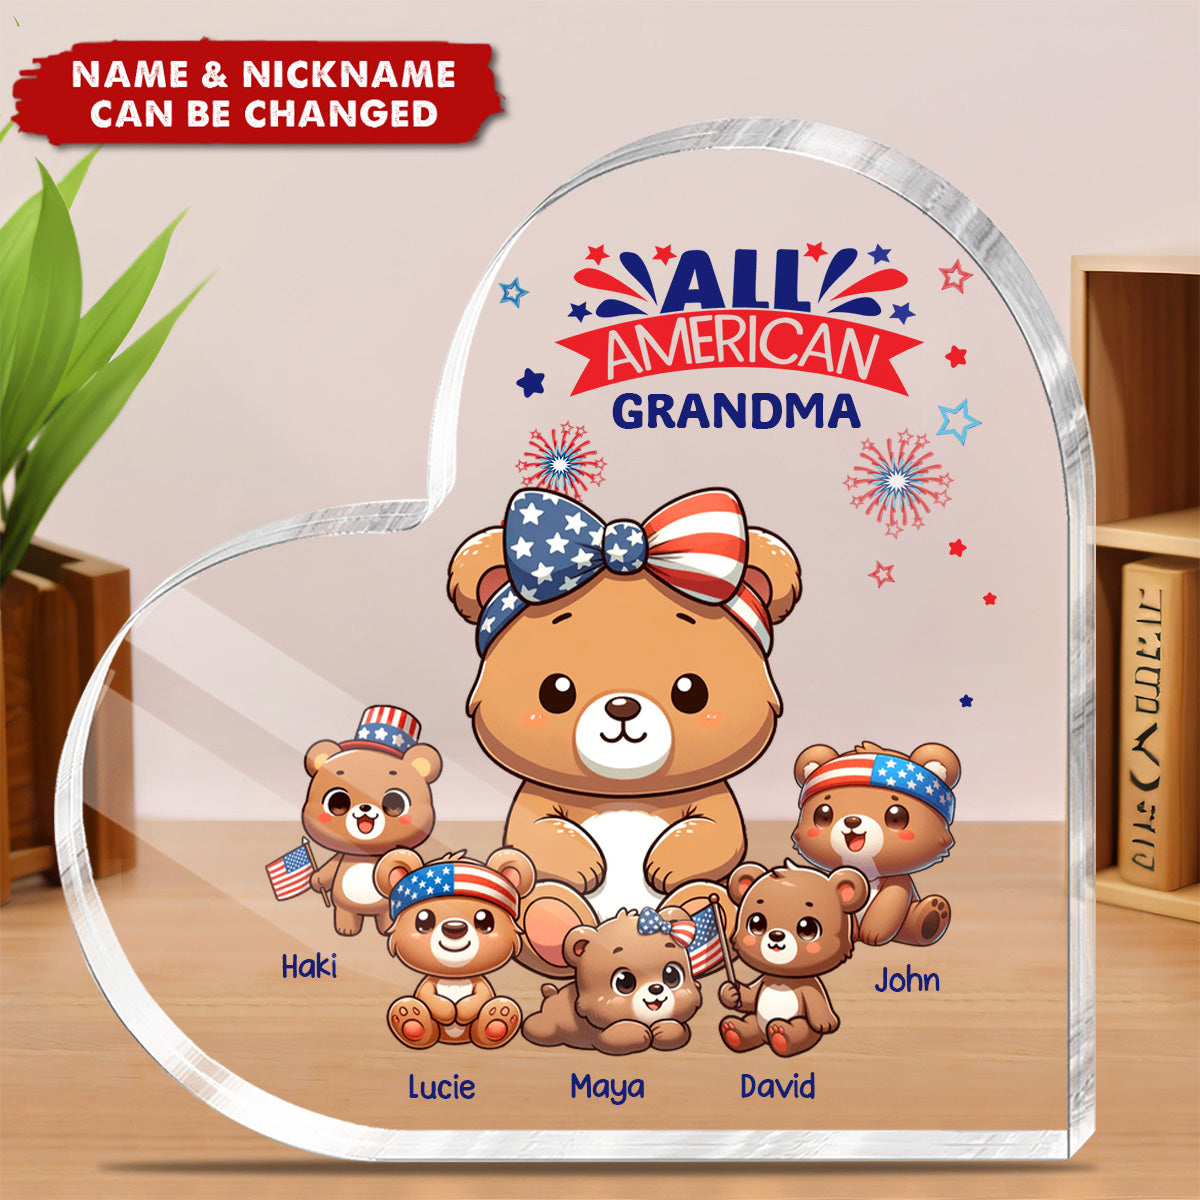 All American Nana Grandma Cute Bear Personalized Heart Shaped Acrylic Plaque